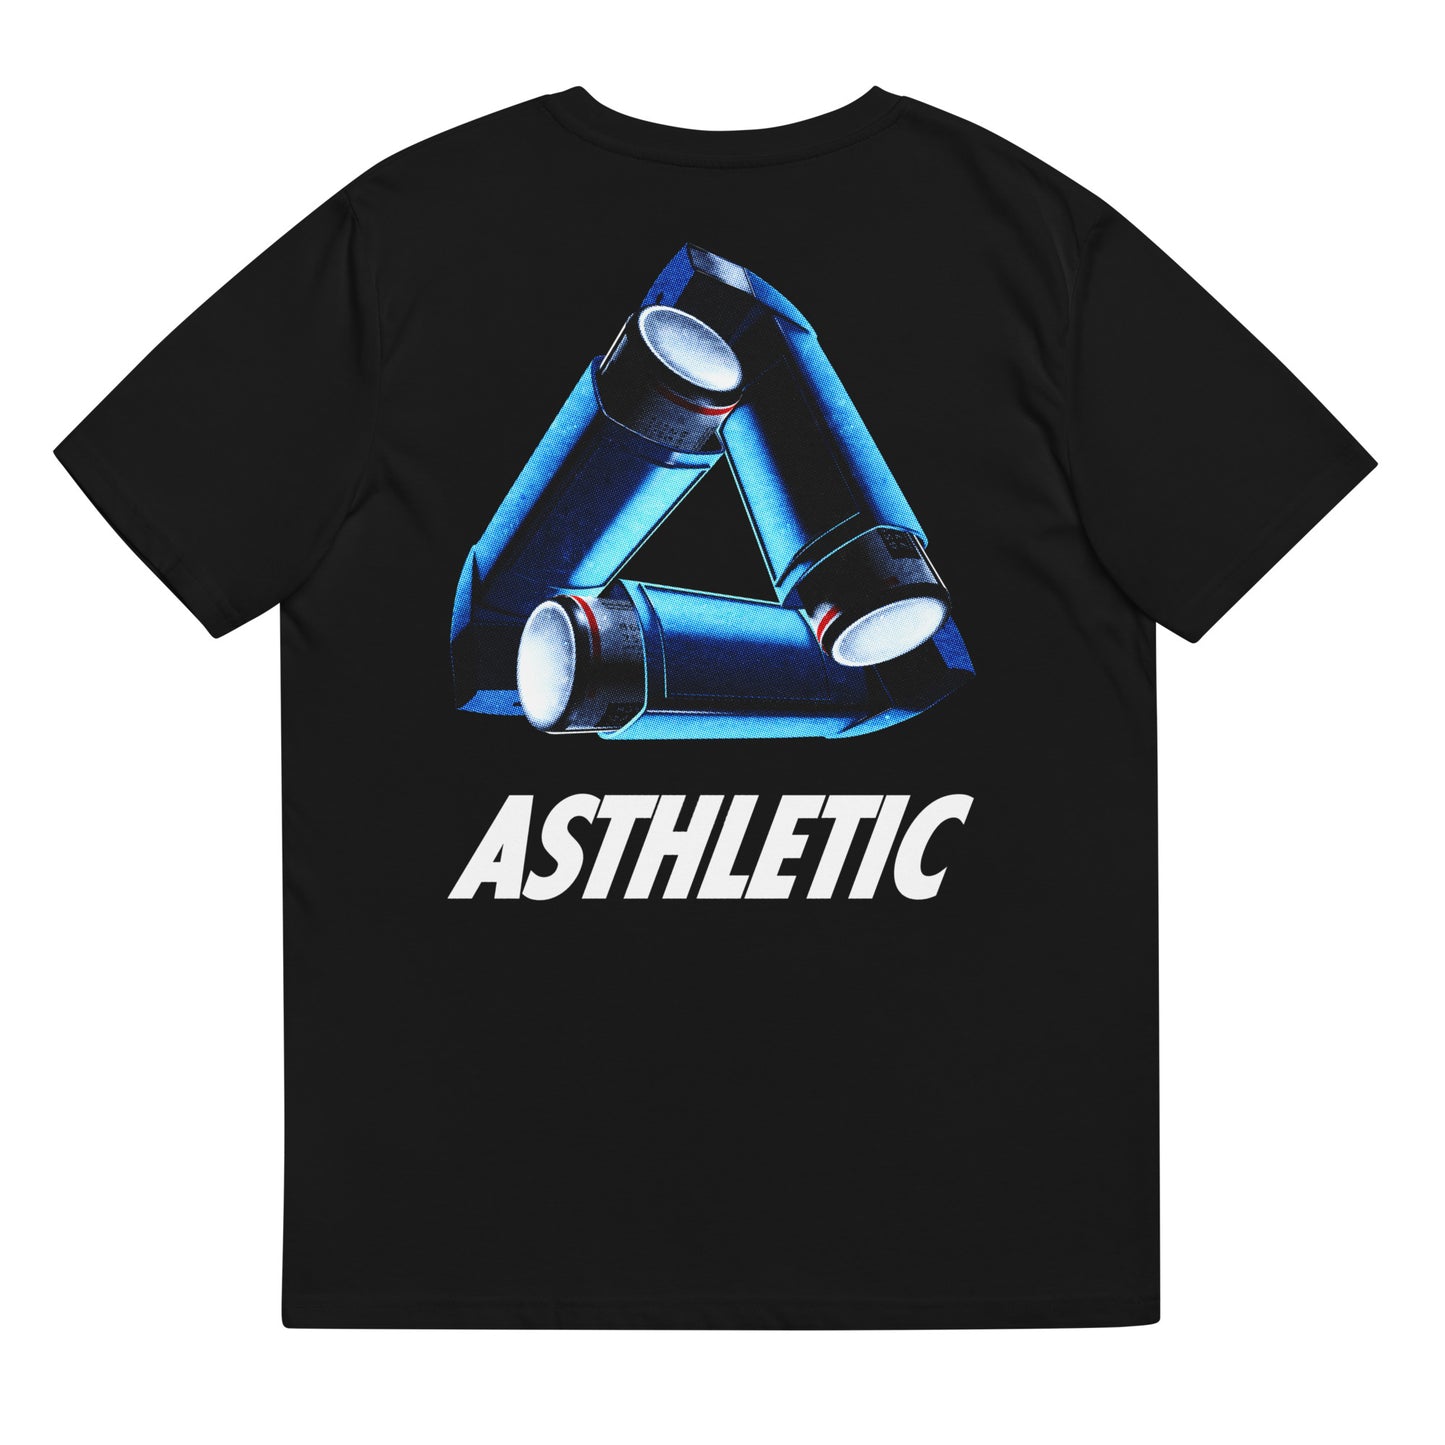 ASTHLETIC - Tee